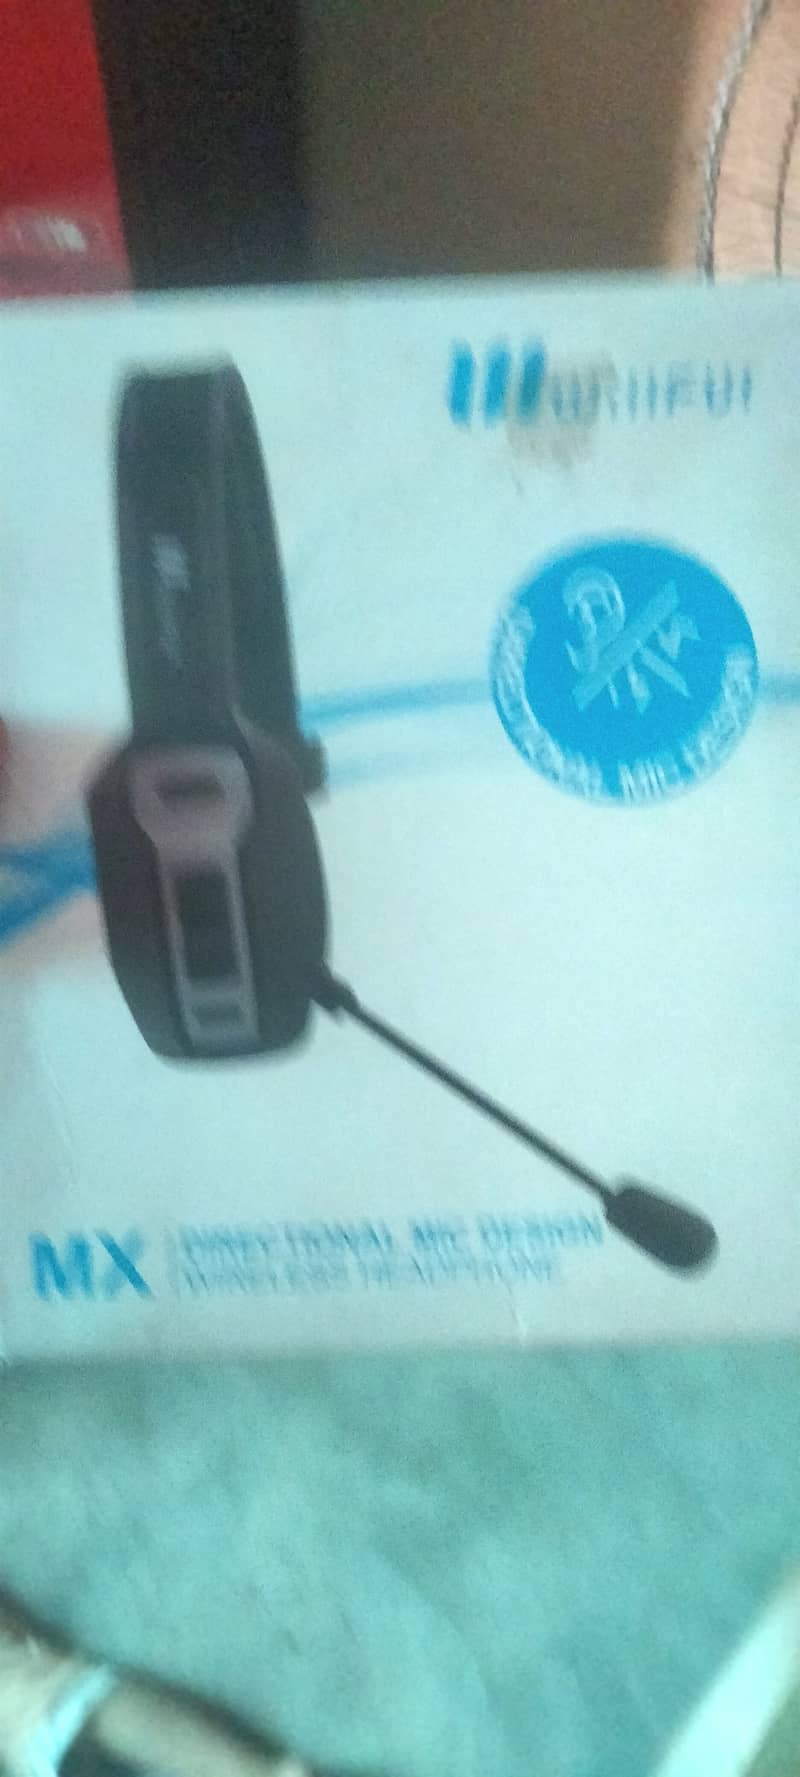 MX Bluetooth head phone 2